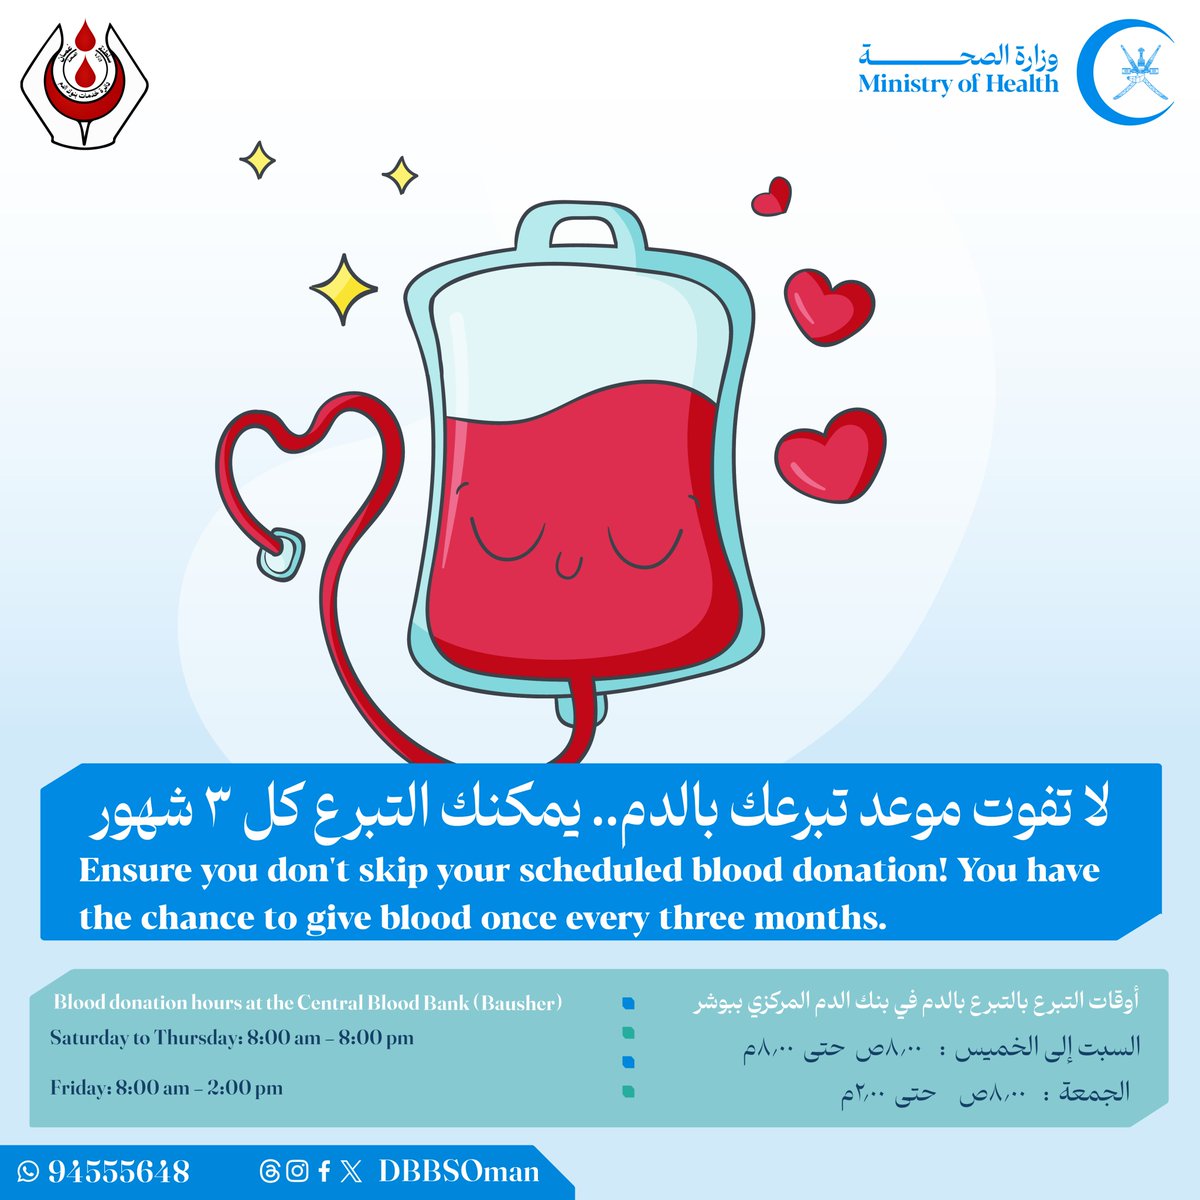 لا تفوت موعد تبرعك بالدم 🩸🩸 يمكنك التبرع كل 3 شهور Ensure you don't skip your scheduled blood donation! 🩸🩸 You have the chance to give blood once every three months.